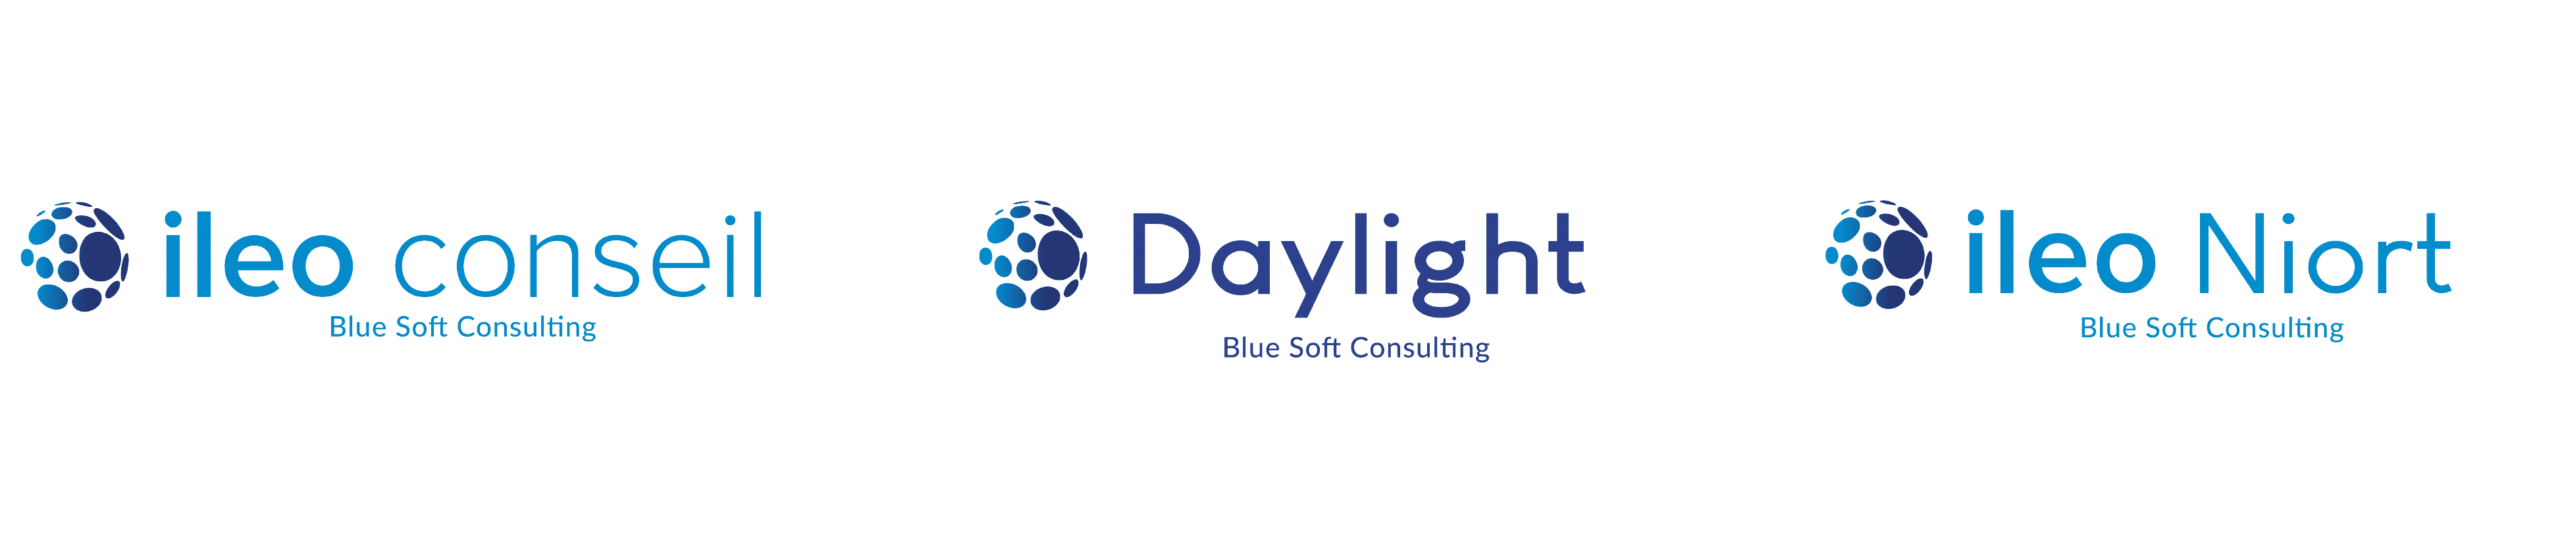 Blue Soft Consulting logo's